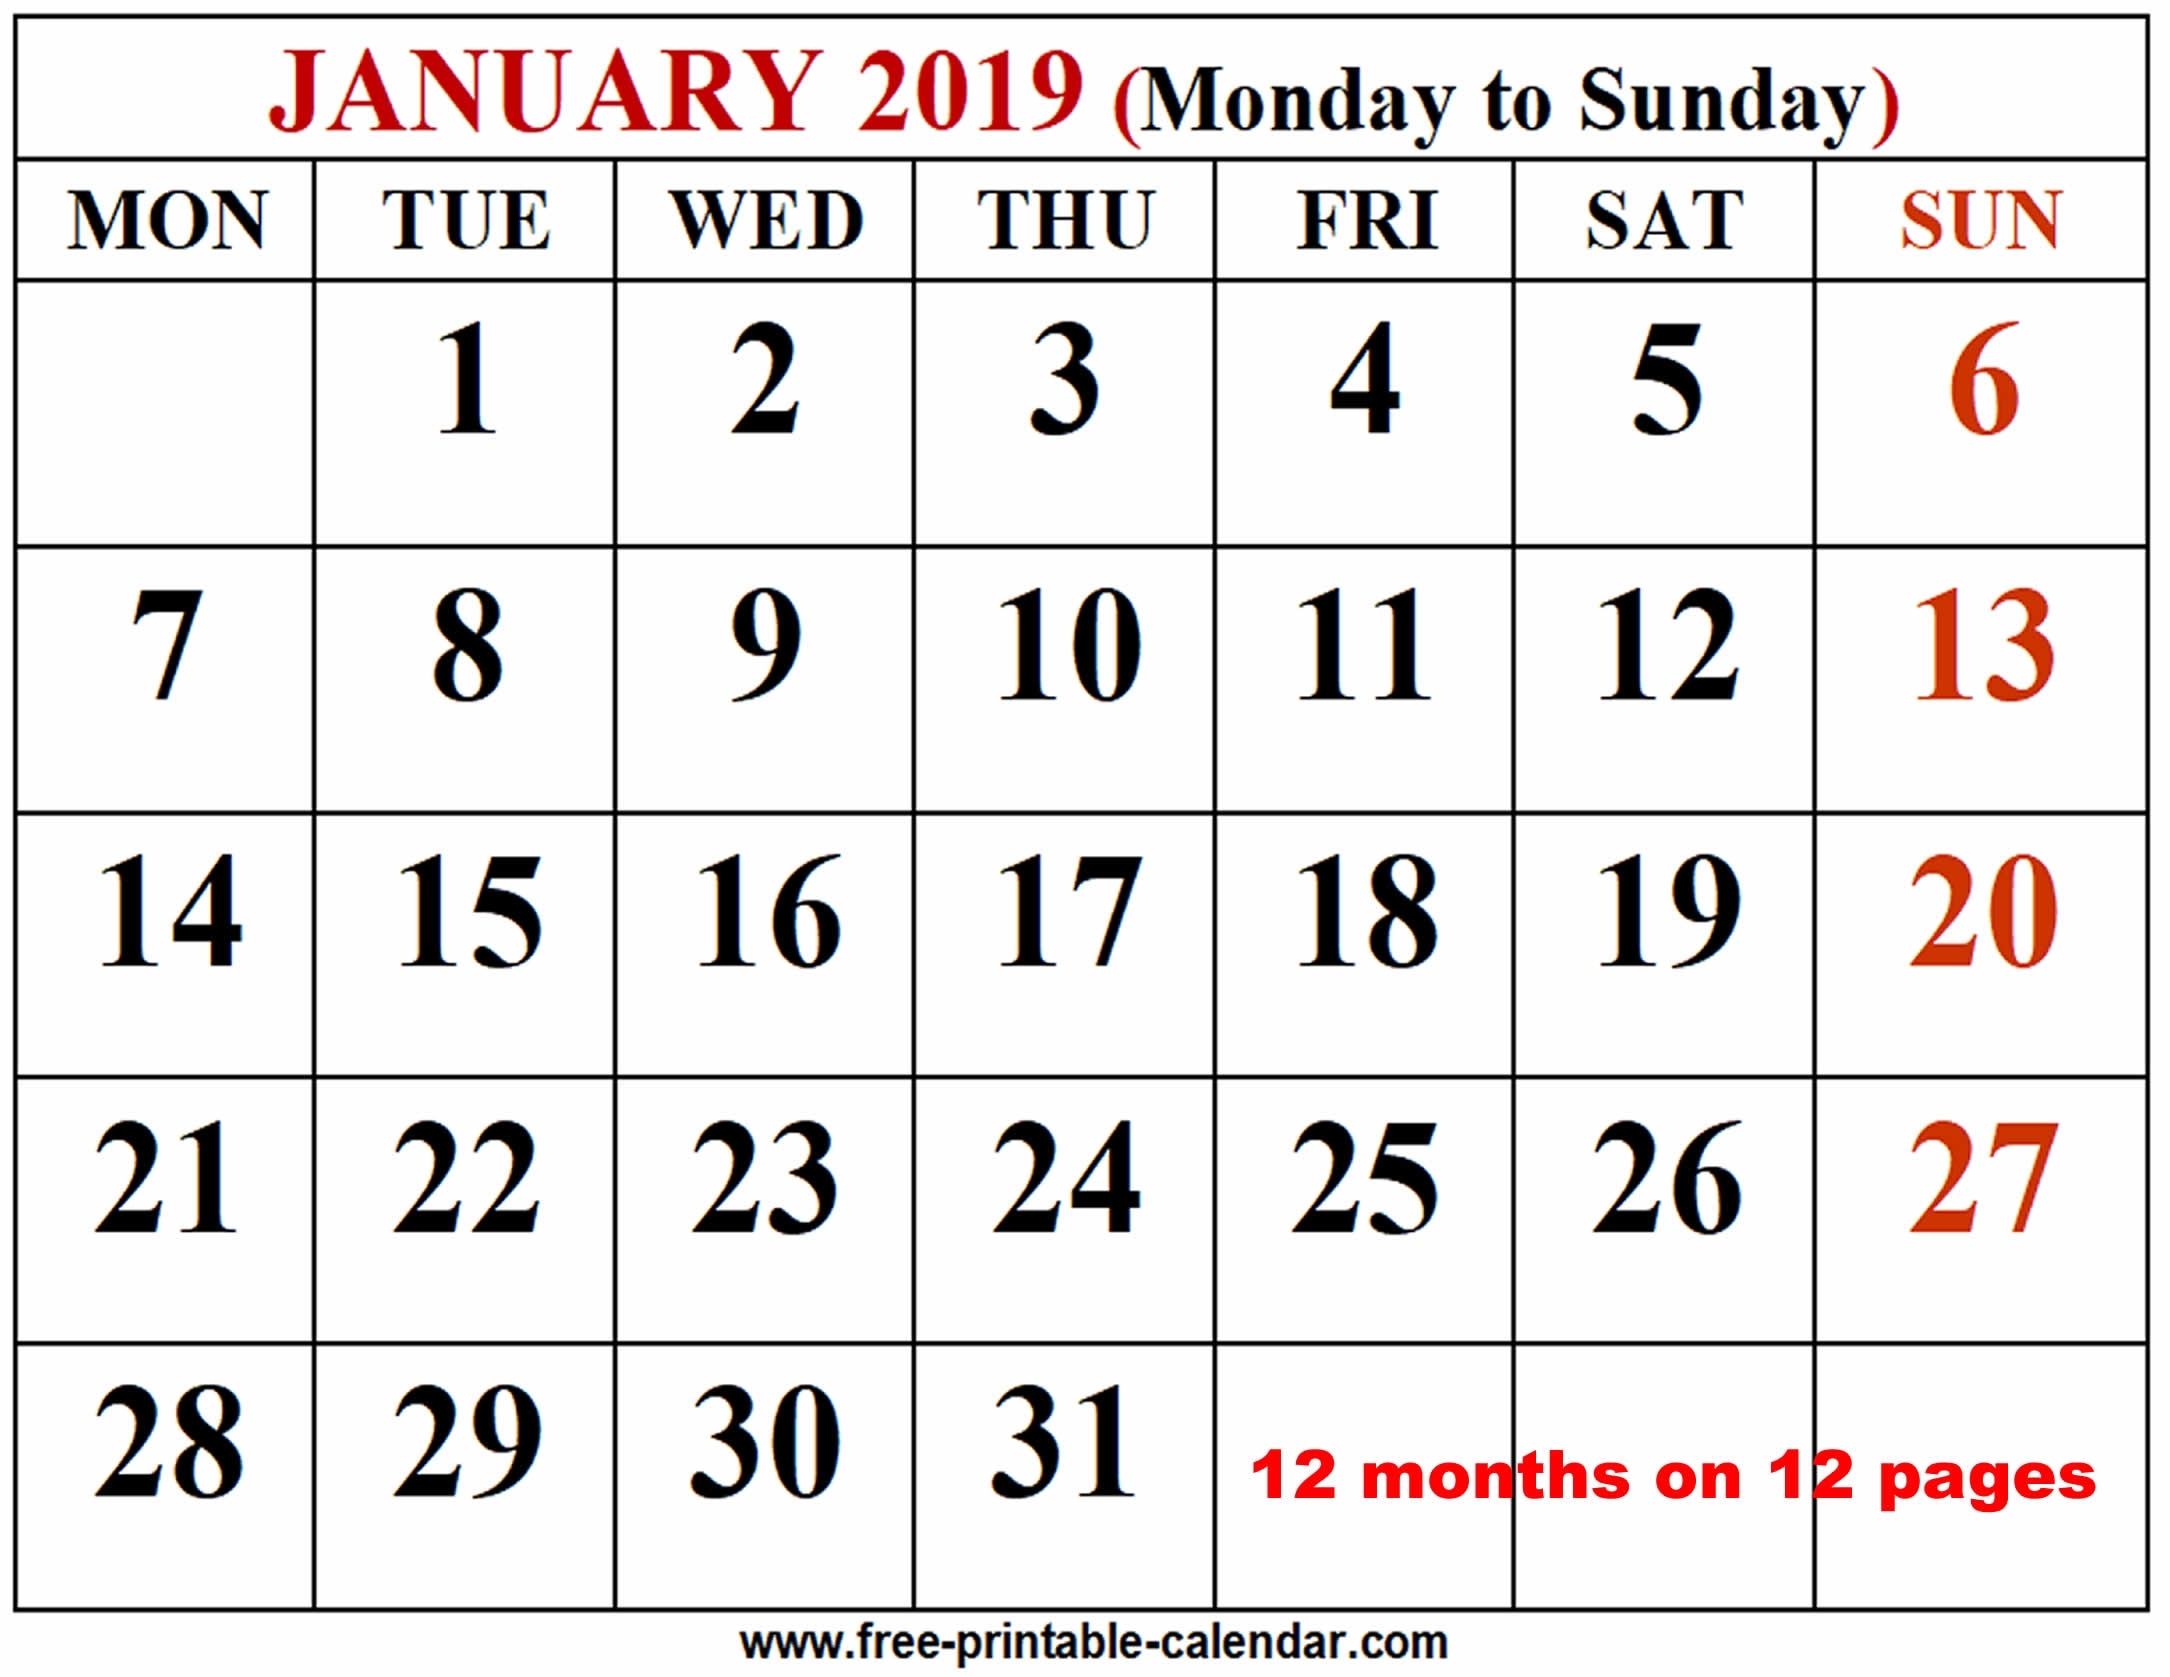 2019 Calendar Template - Free-Printable-Calendar throughout 12 Month Calendar To Print